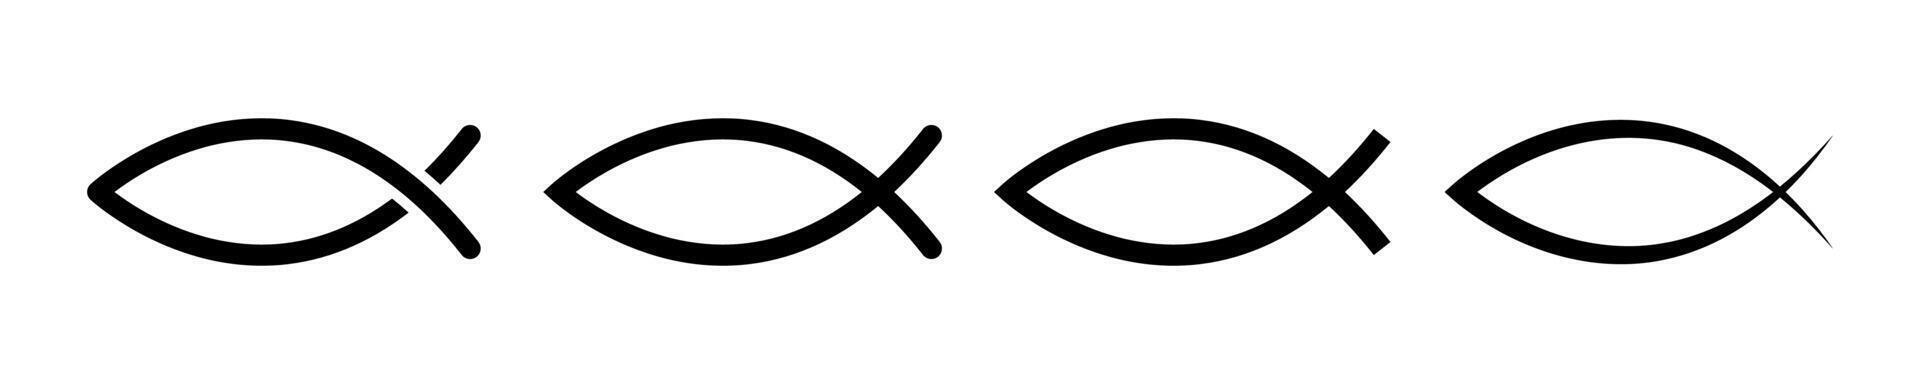 Christian Fisch Symbole. Christian Religion Symbole. Christian Symbol Satz. Christian Fisch Symbole vektor